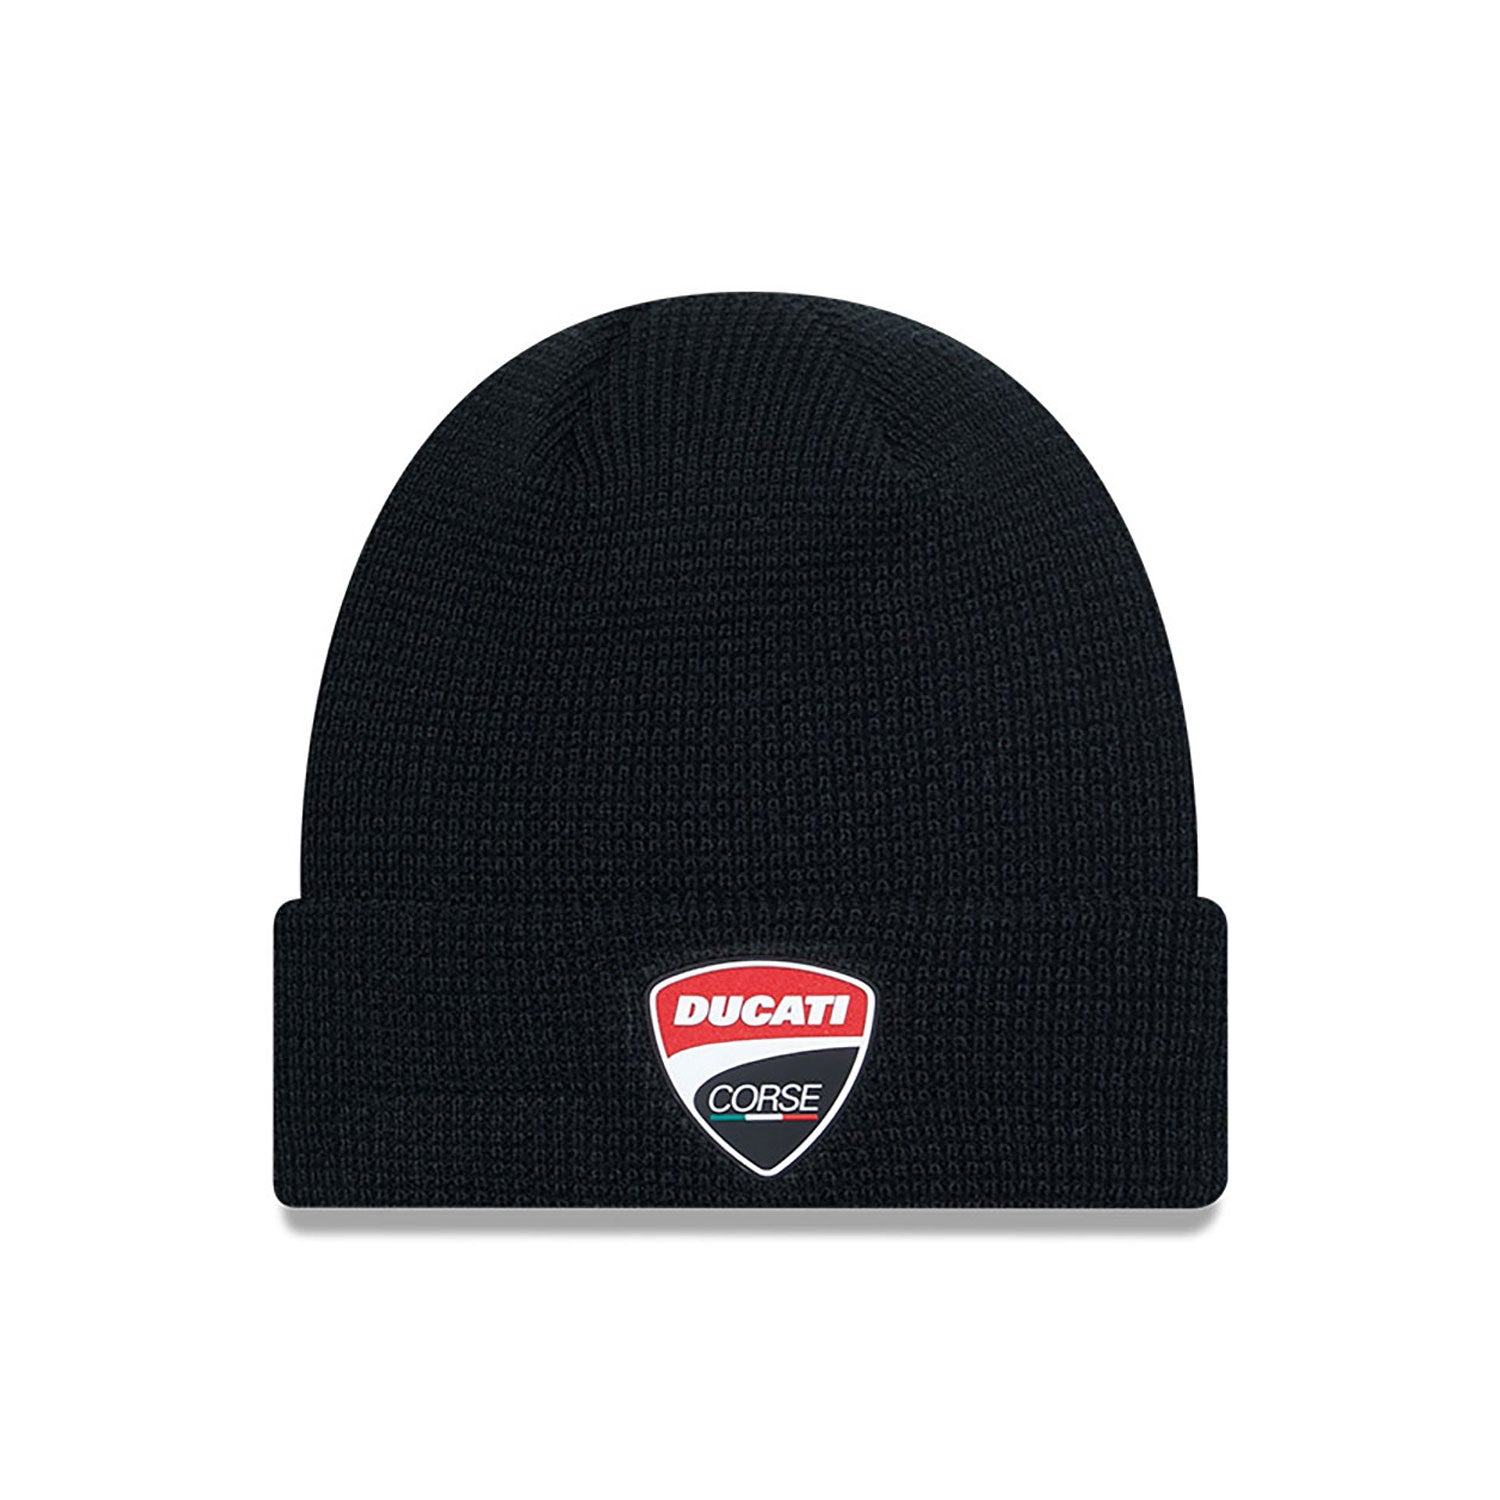 Ducati Motorsport Logo Cuff Knit Beanie Hat Black